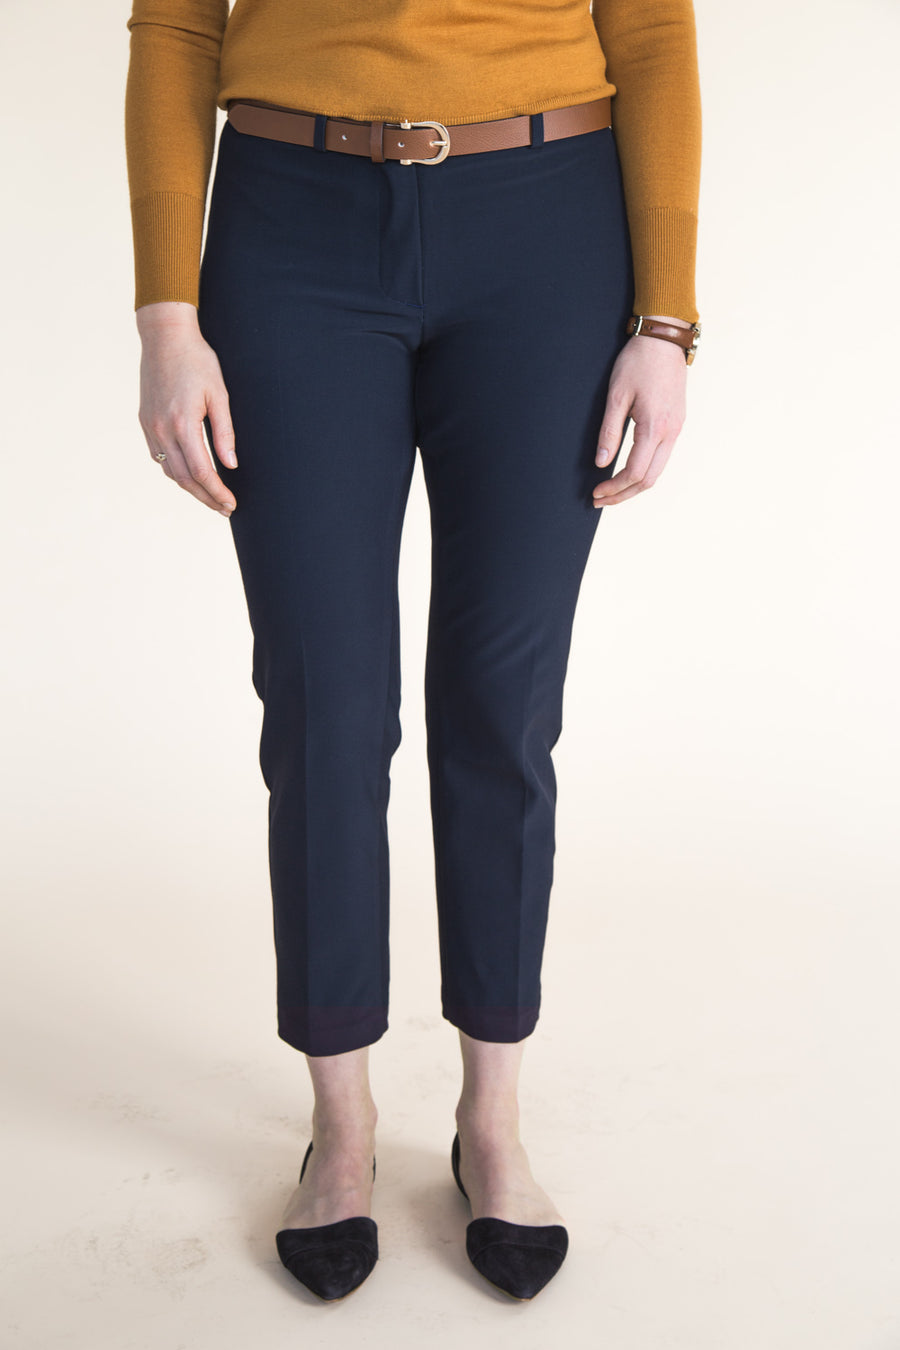 Sasha Trousers Pattern, Pants Pattern